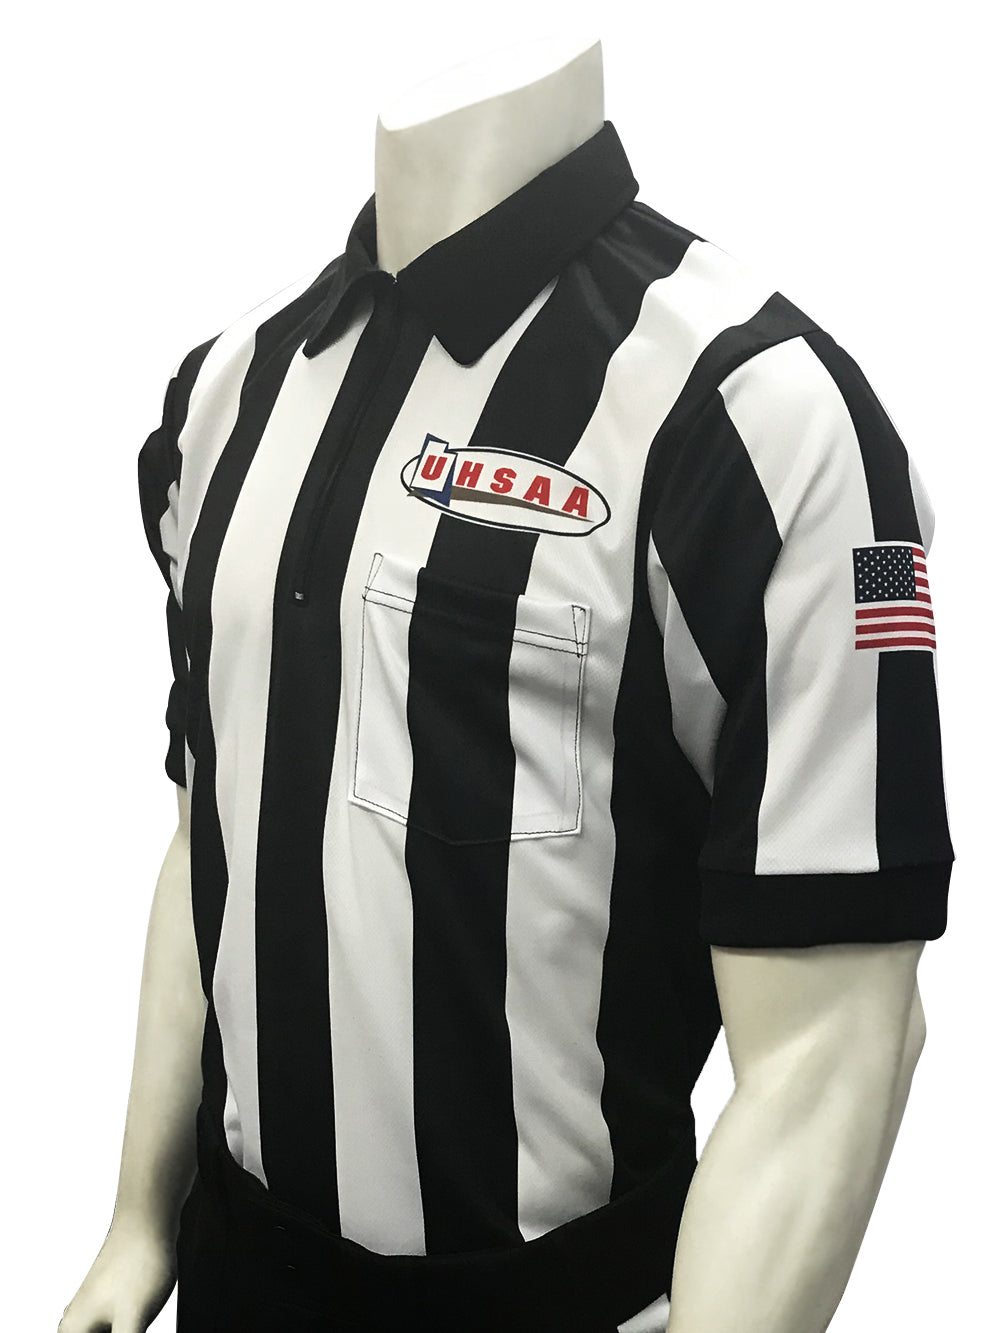 USA137UT-607 - Smitty "Made in USA" - "BODY FLEX" Football Men's Short Sleeve Shirt